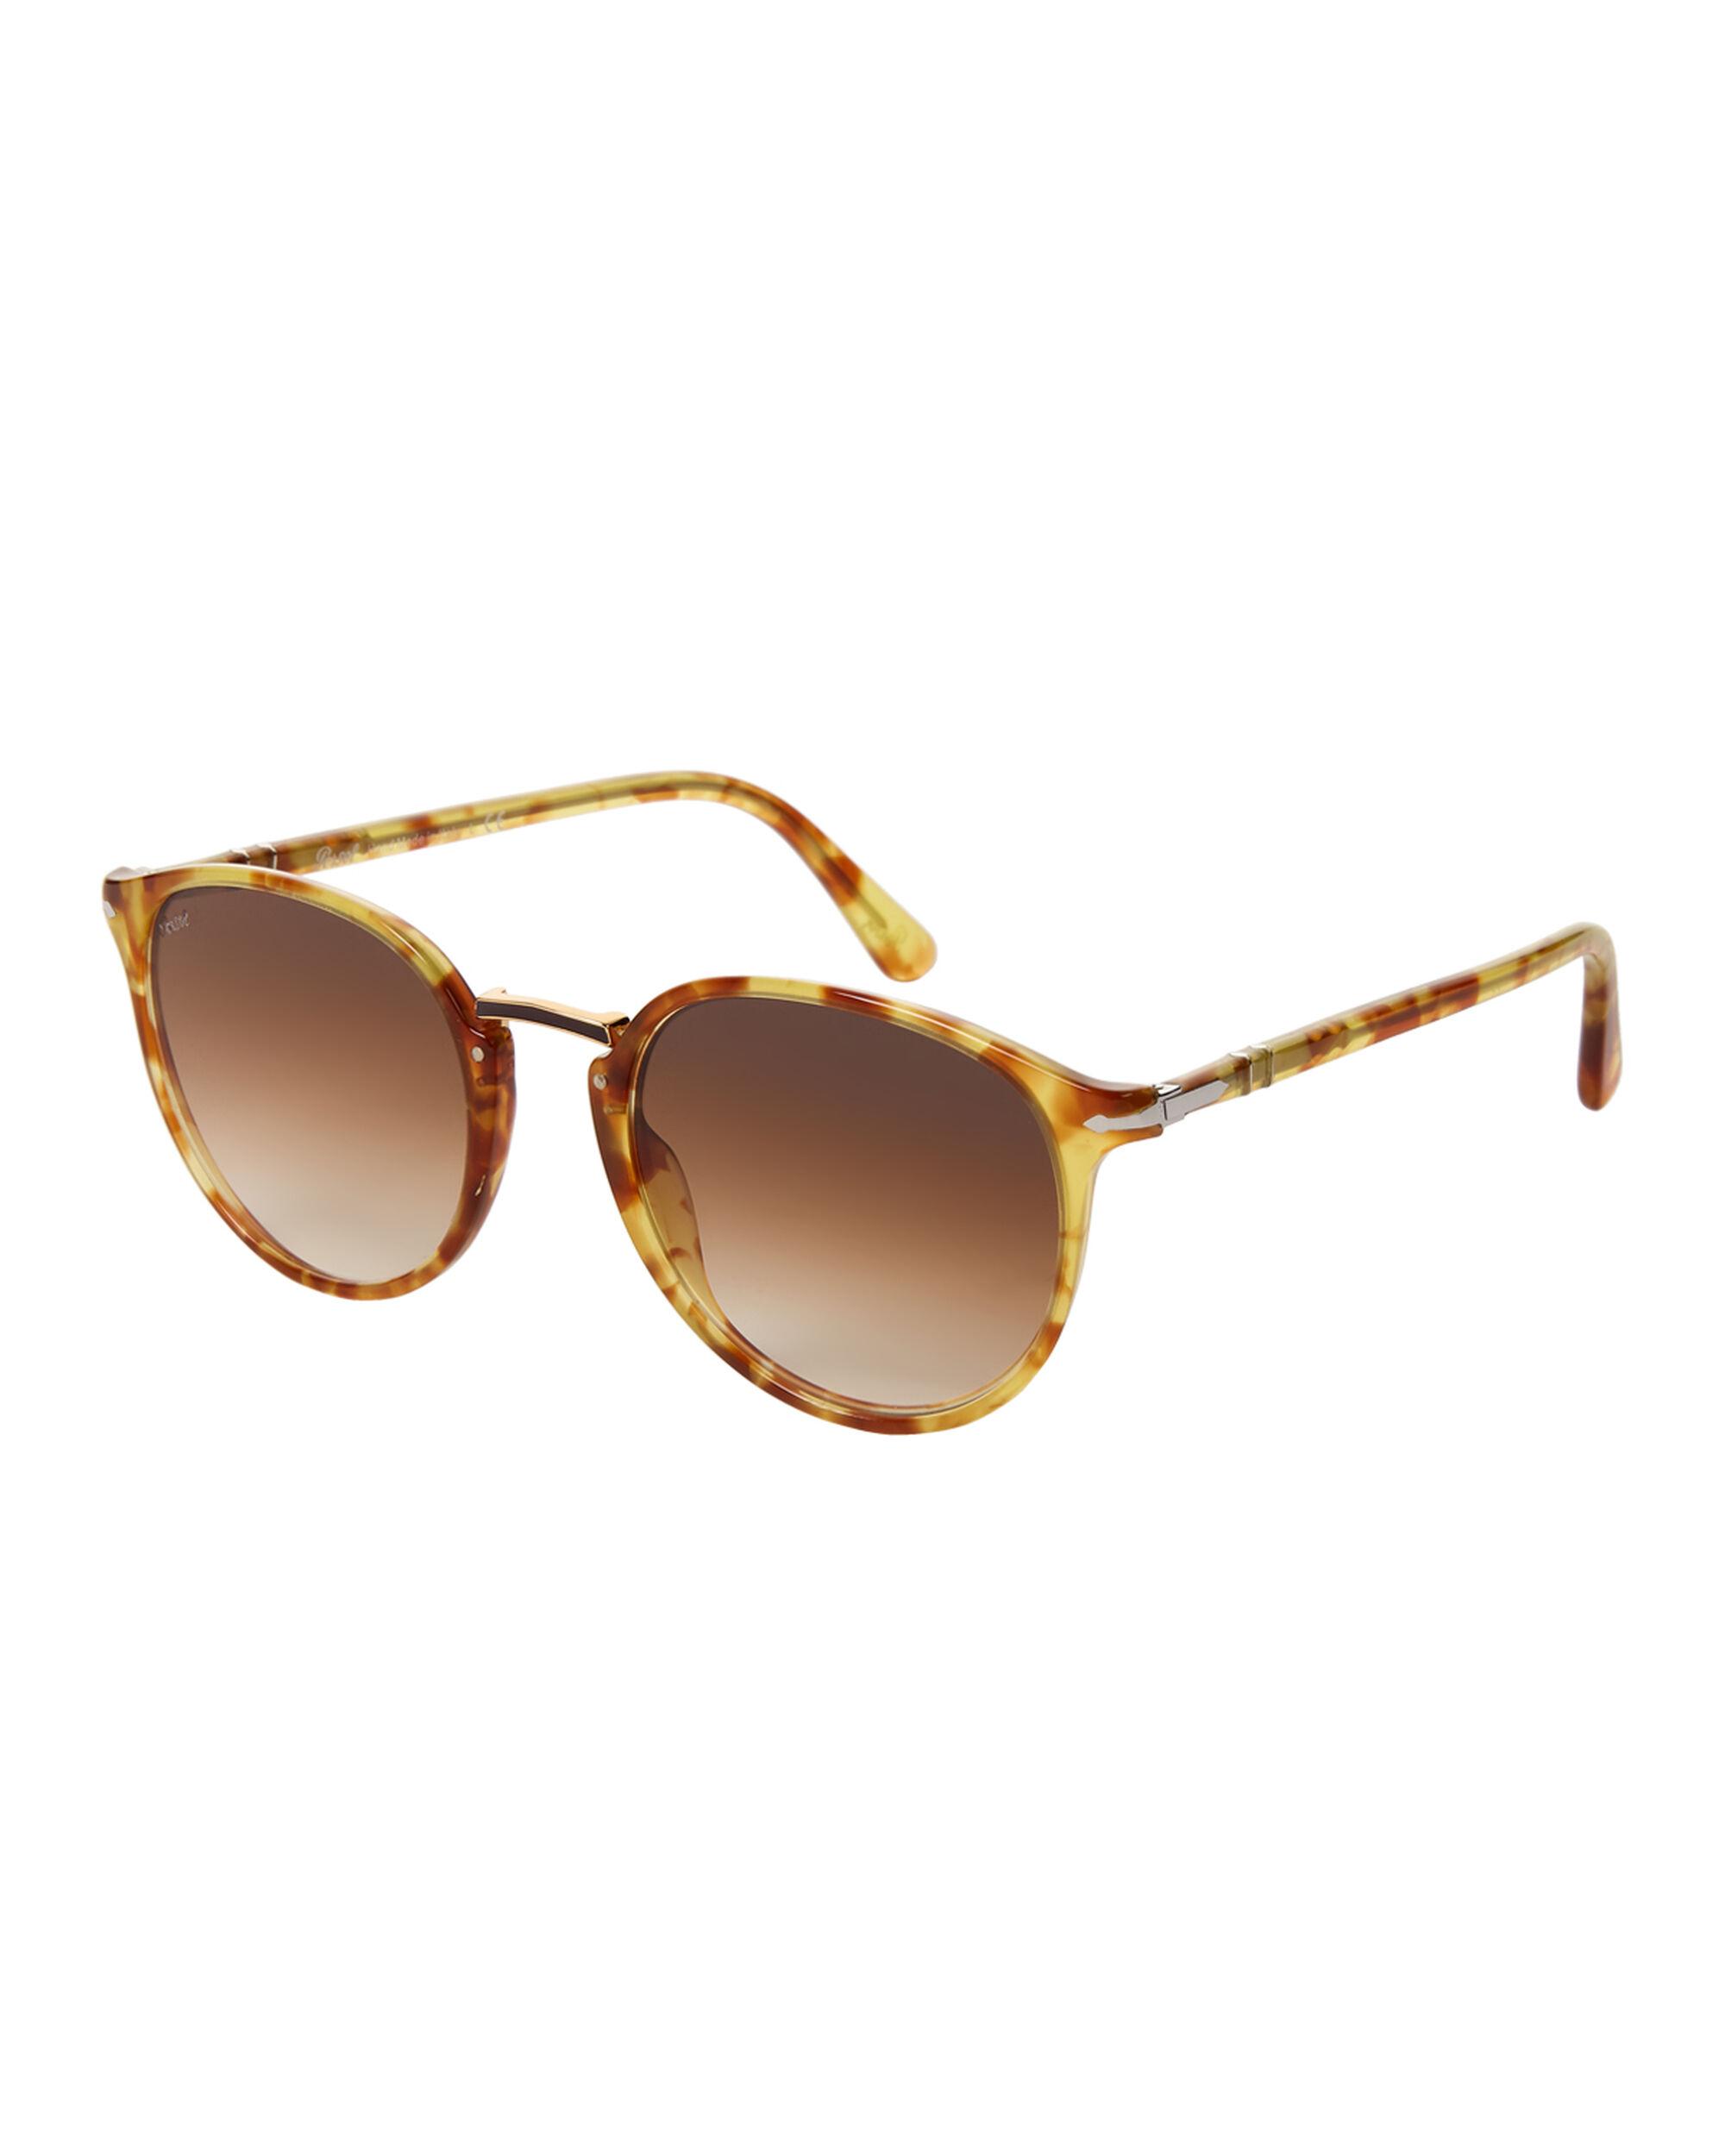 Persol Po3210 Tortoiseshell-look Round Sunglasses for Men - Lyst